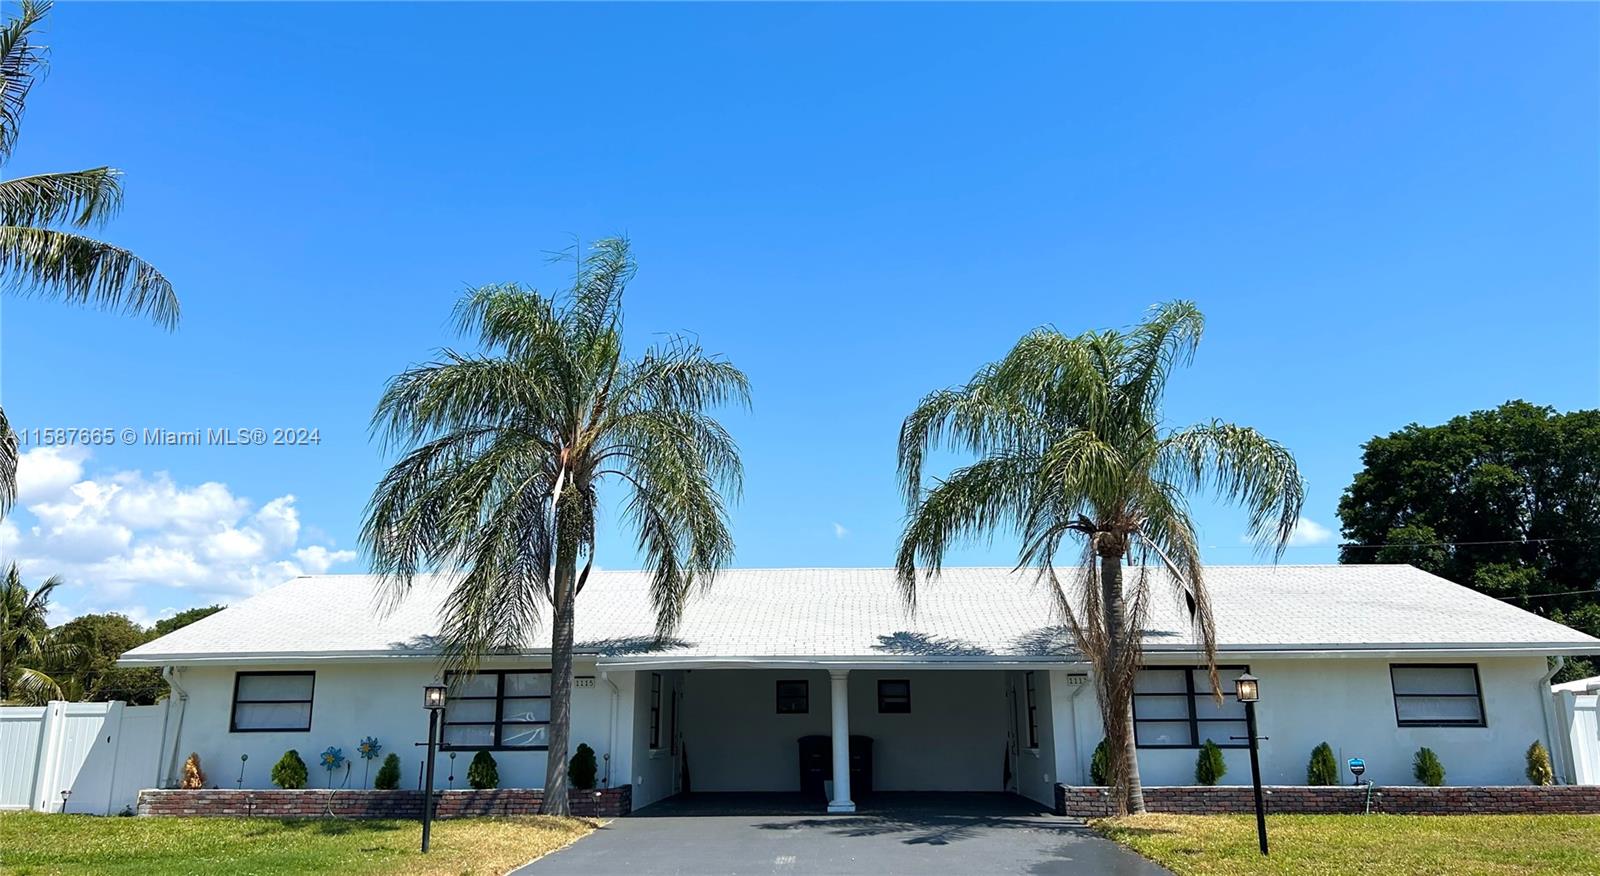 Rental Property at 1111 Brown Rd Rd, Lake Worth, Palm Beach County, Florida -  - $925,000 MO.